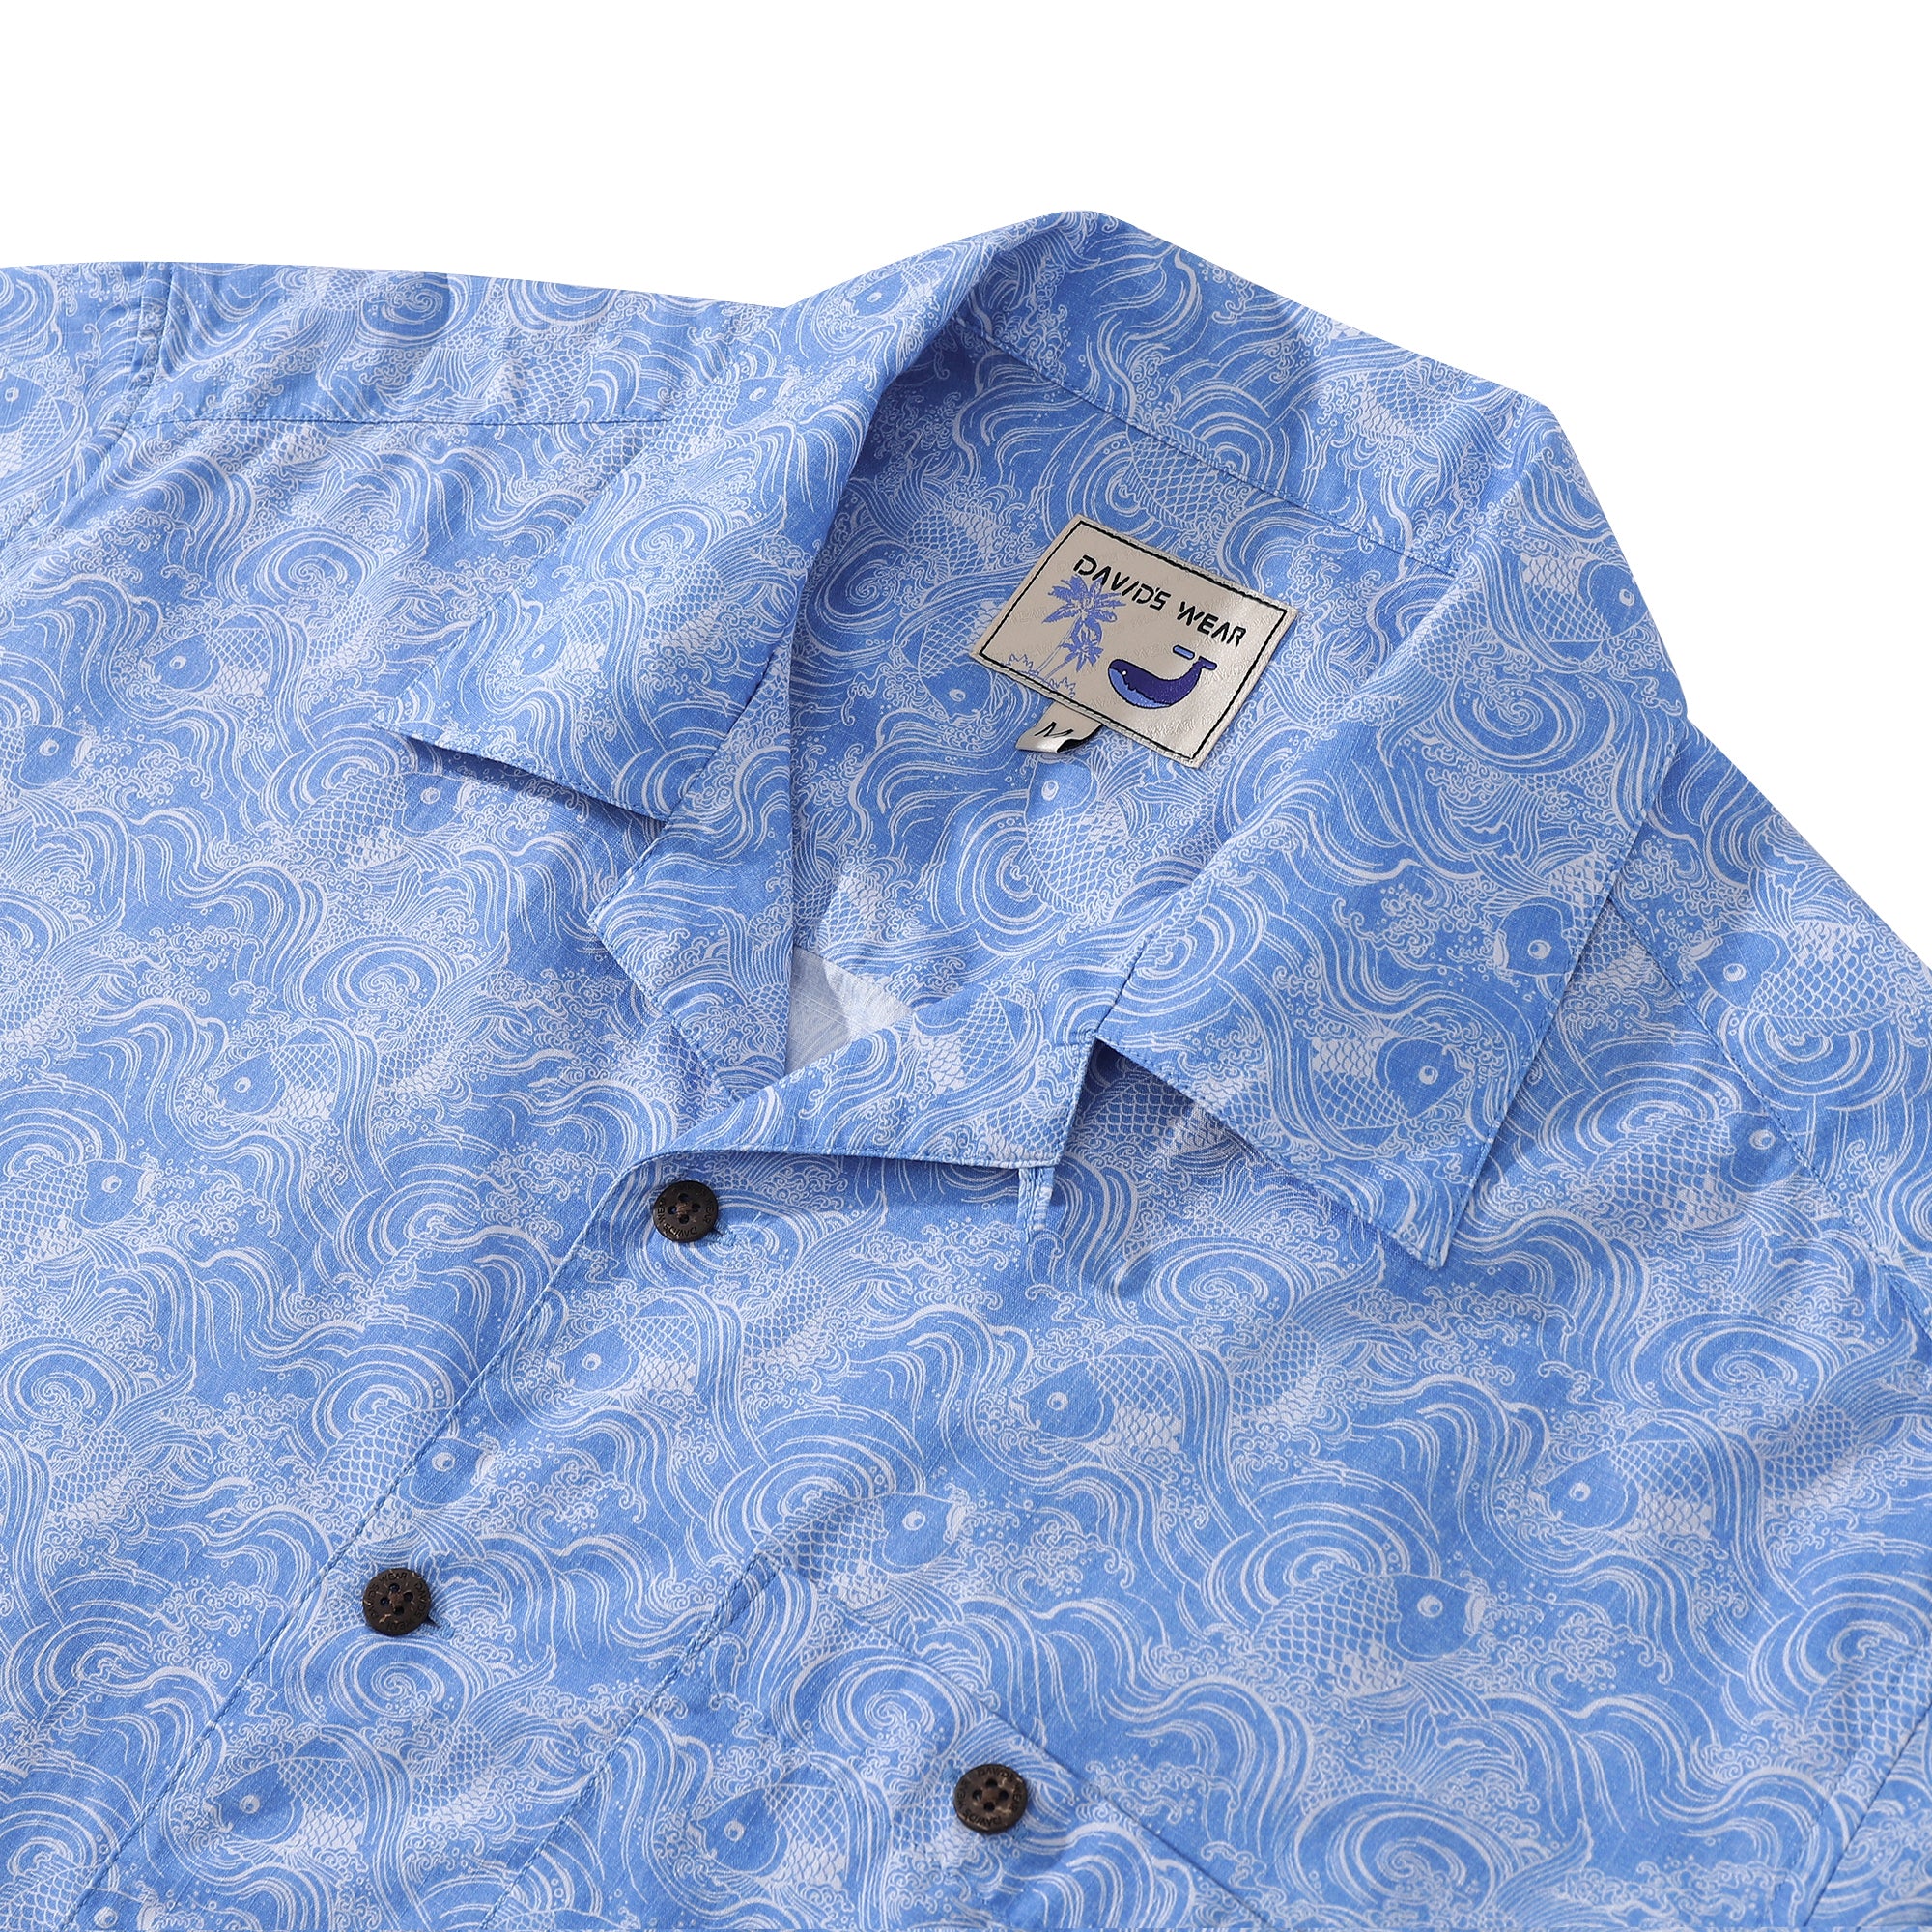 Yiume Hawaiian Shirts for Men Traditional Koi Carp Printed 100% Cotton Short Sleeve - Blue, Men's, Size: Large